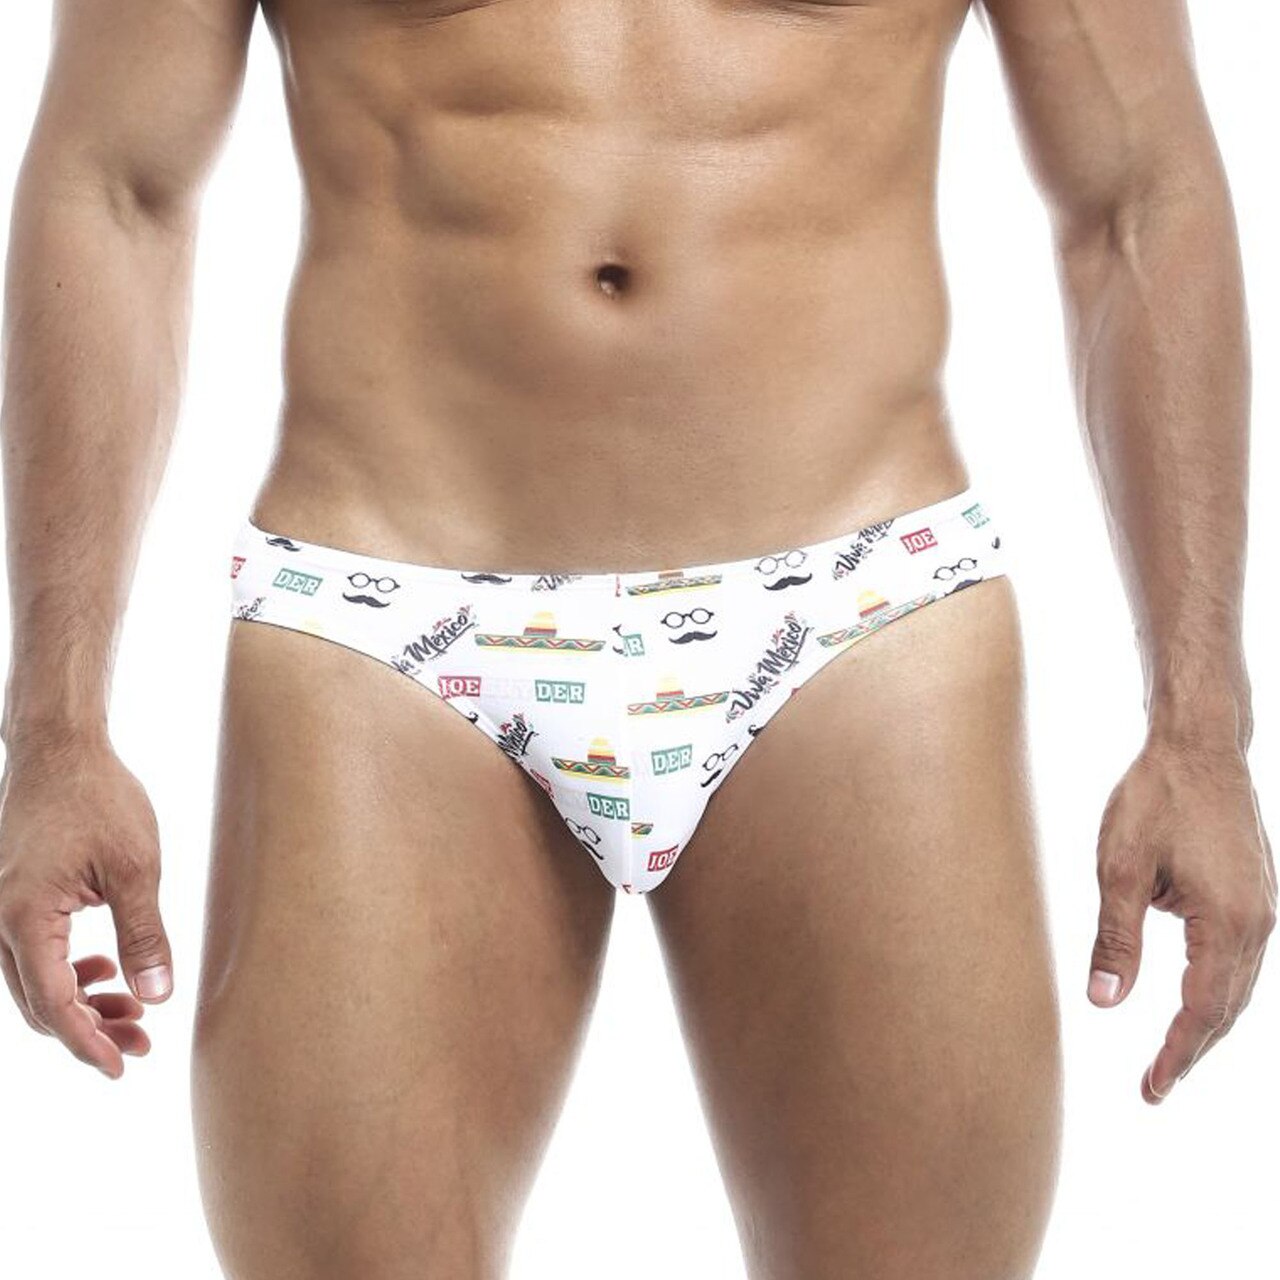 Men's Novelty Costumes Men's Lingerie Bikini Briefs with Hole